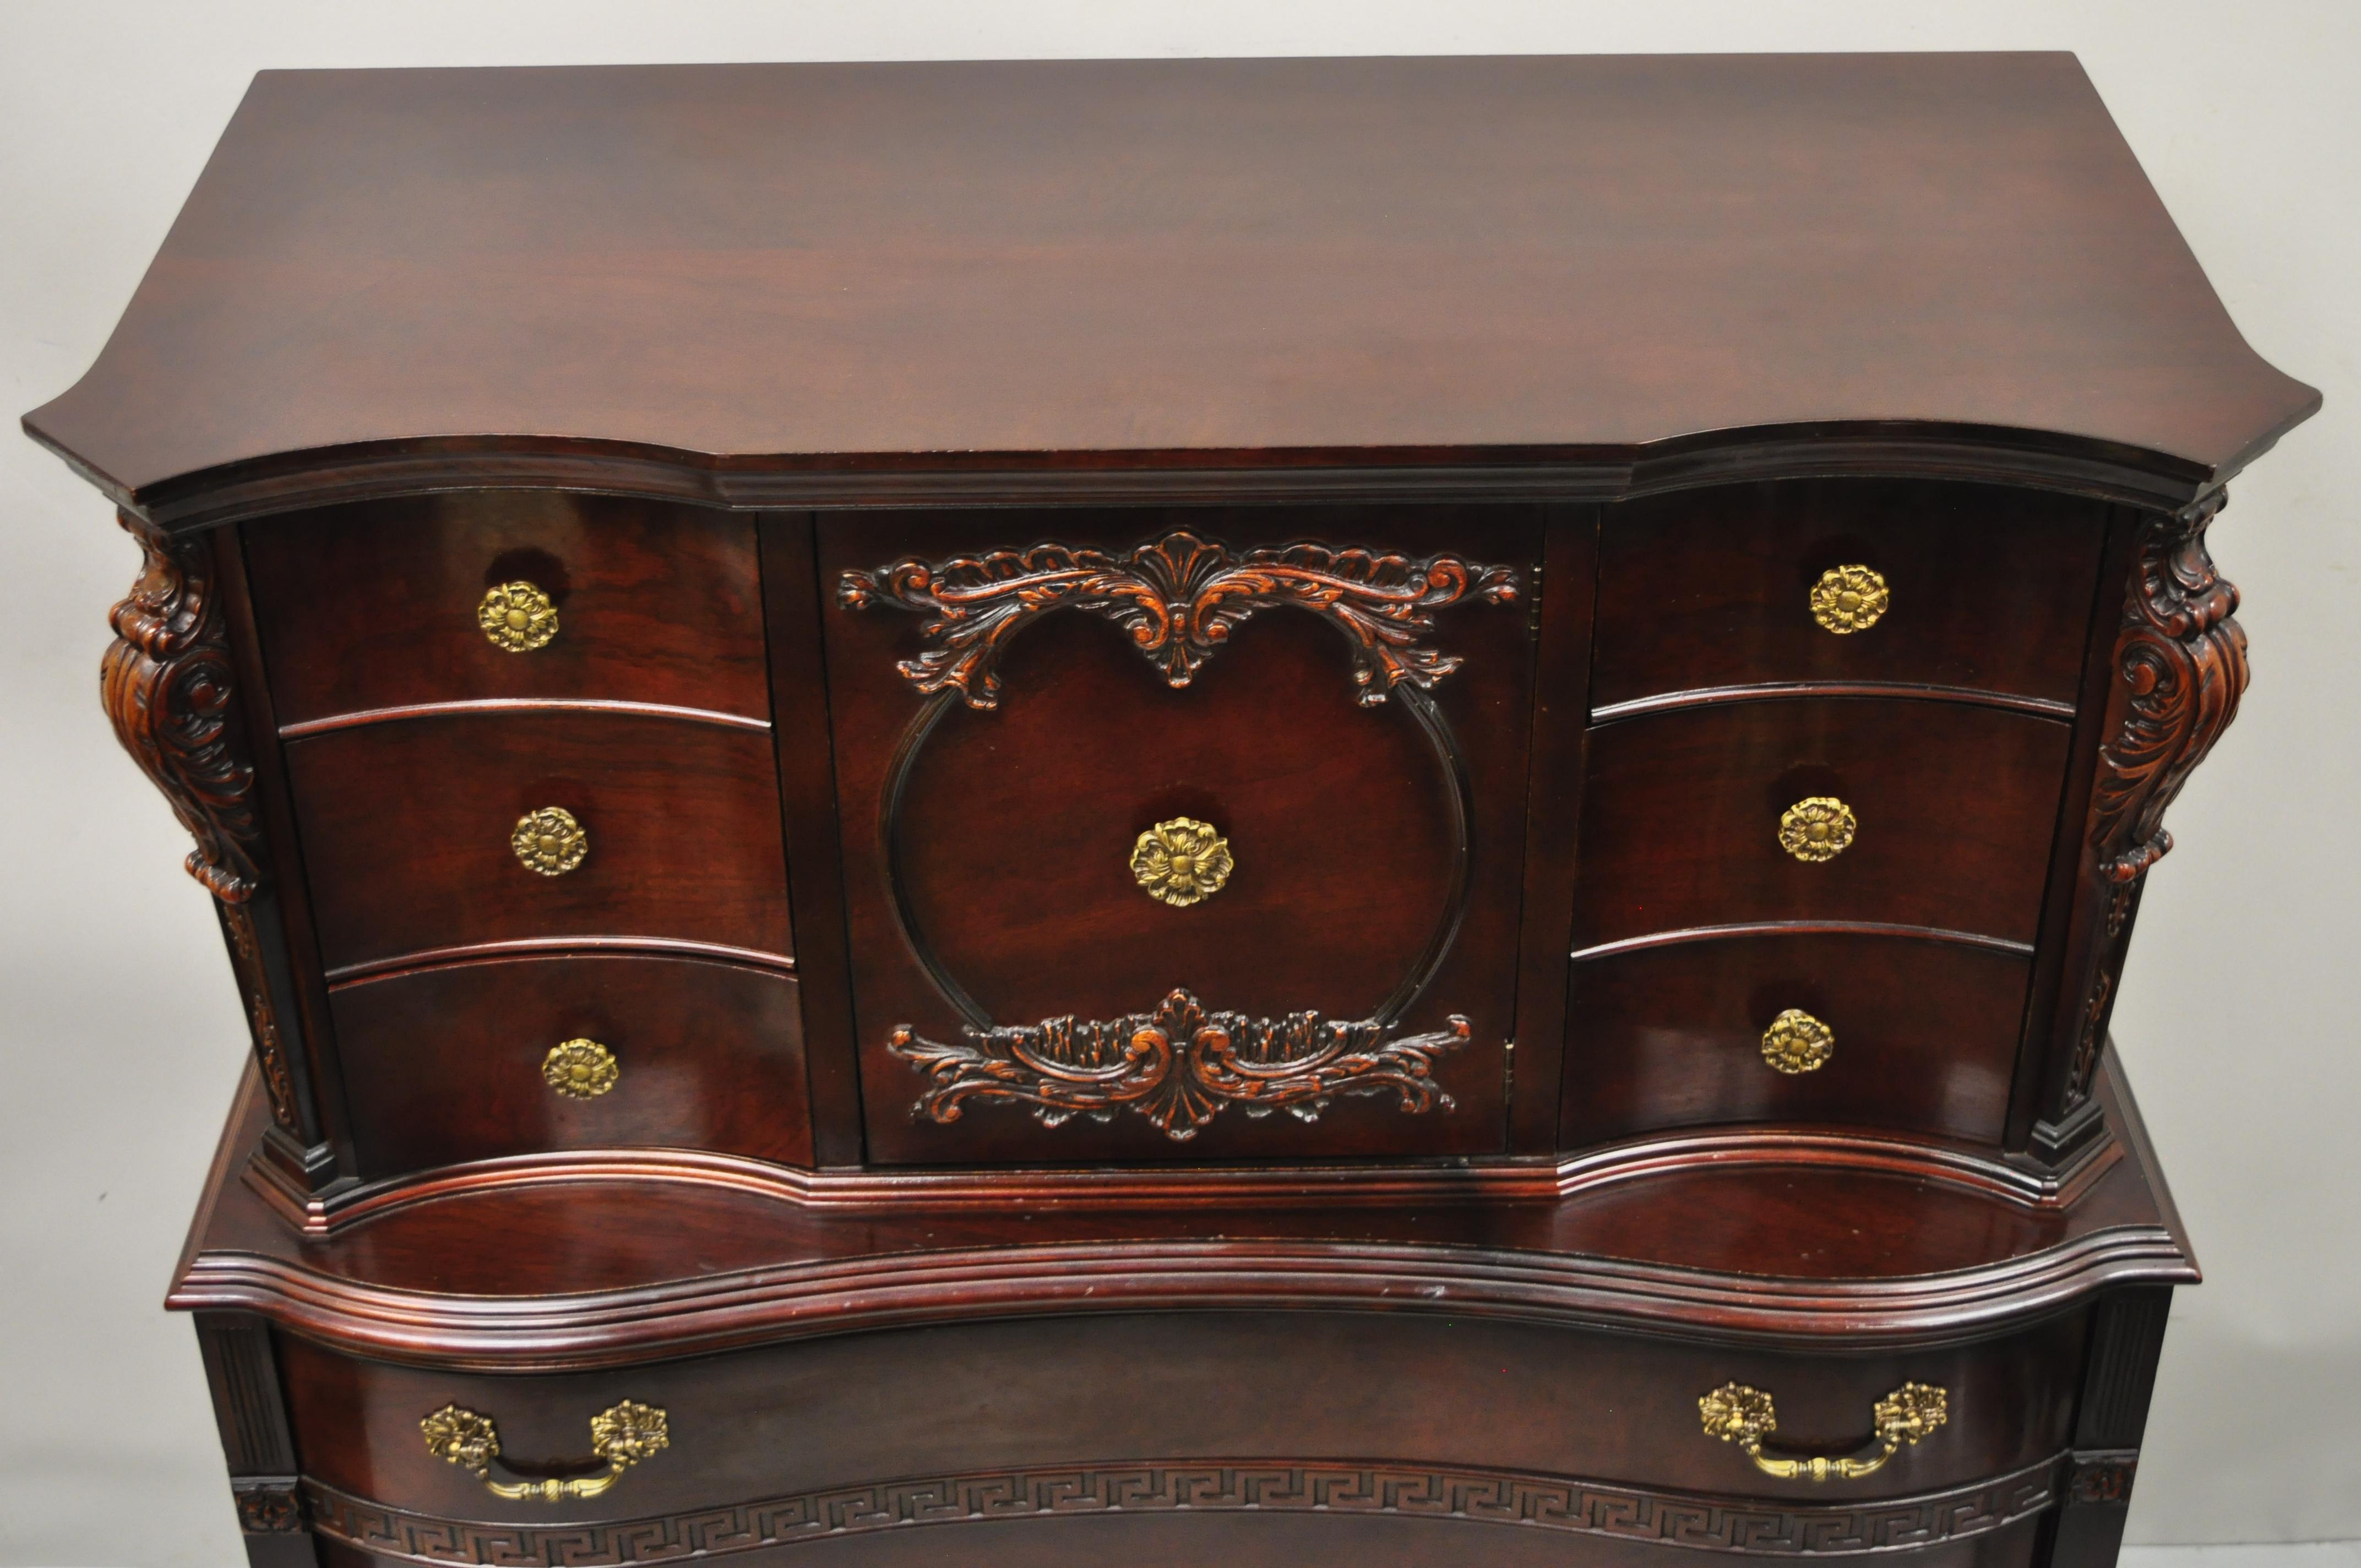 antique mahogany dresser